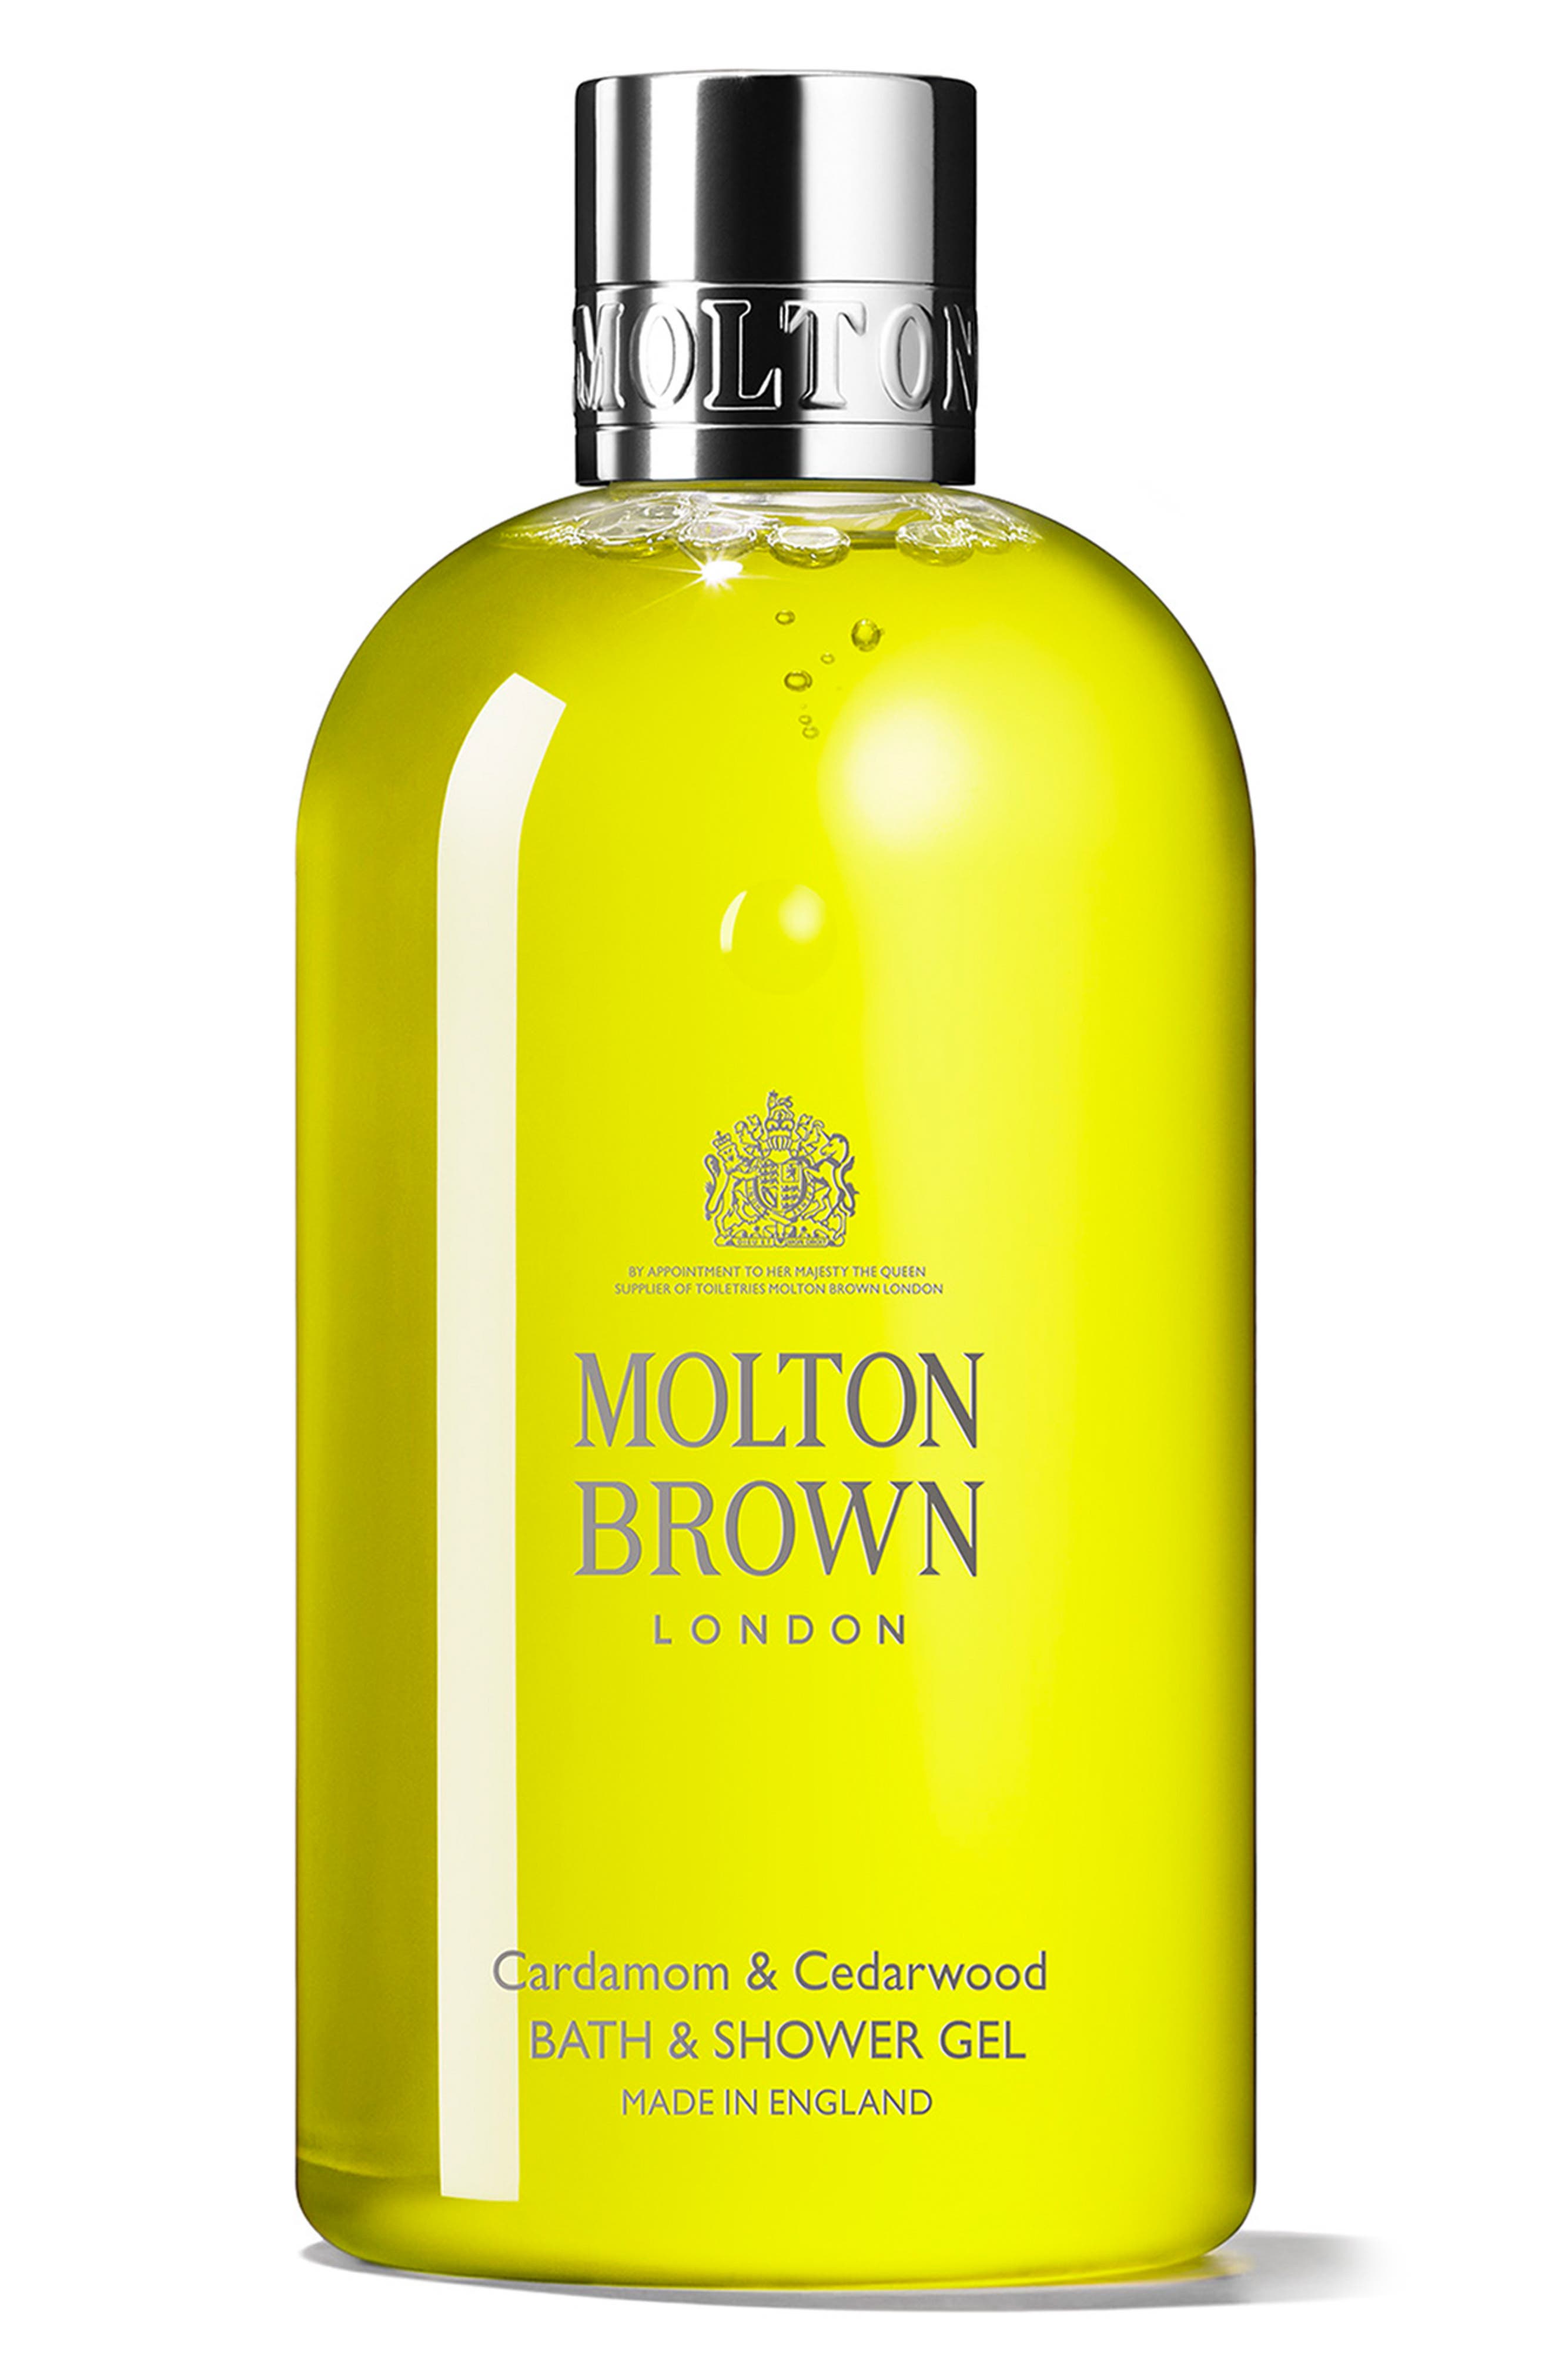 Cardamon & Cedarwood Bath & Shower Gel Molton Brown